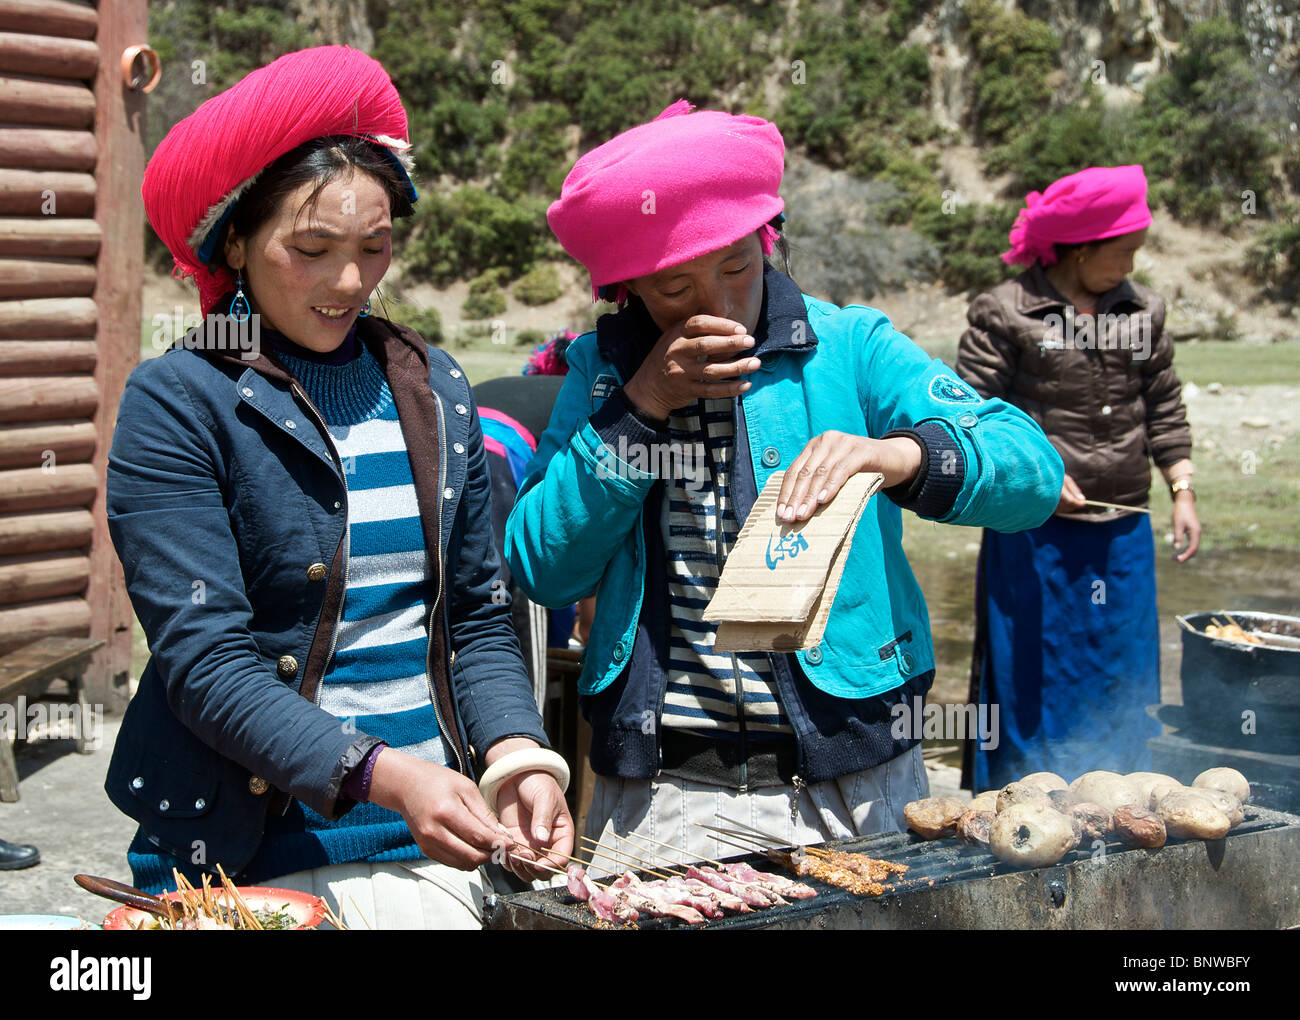 Le tre ragazze barbequeing shish kebab Yunnan in Cina Foto Stock